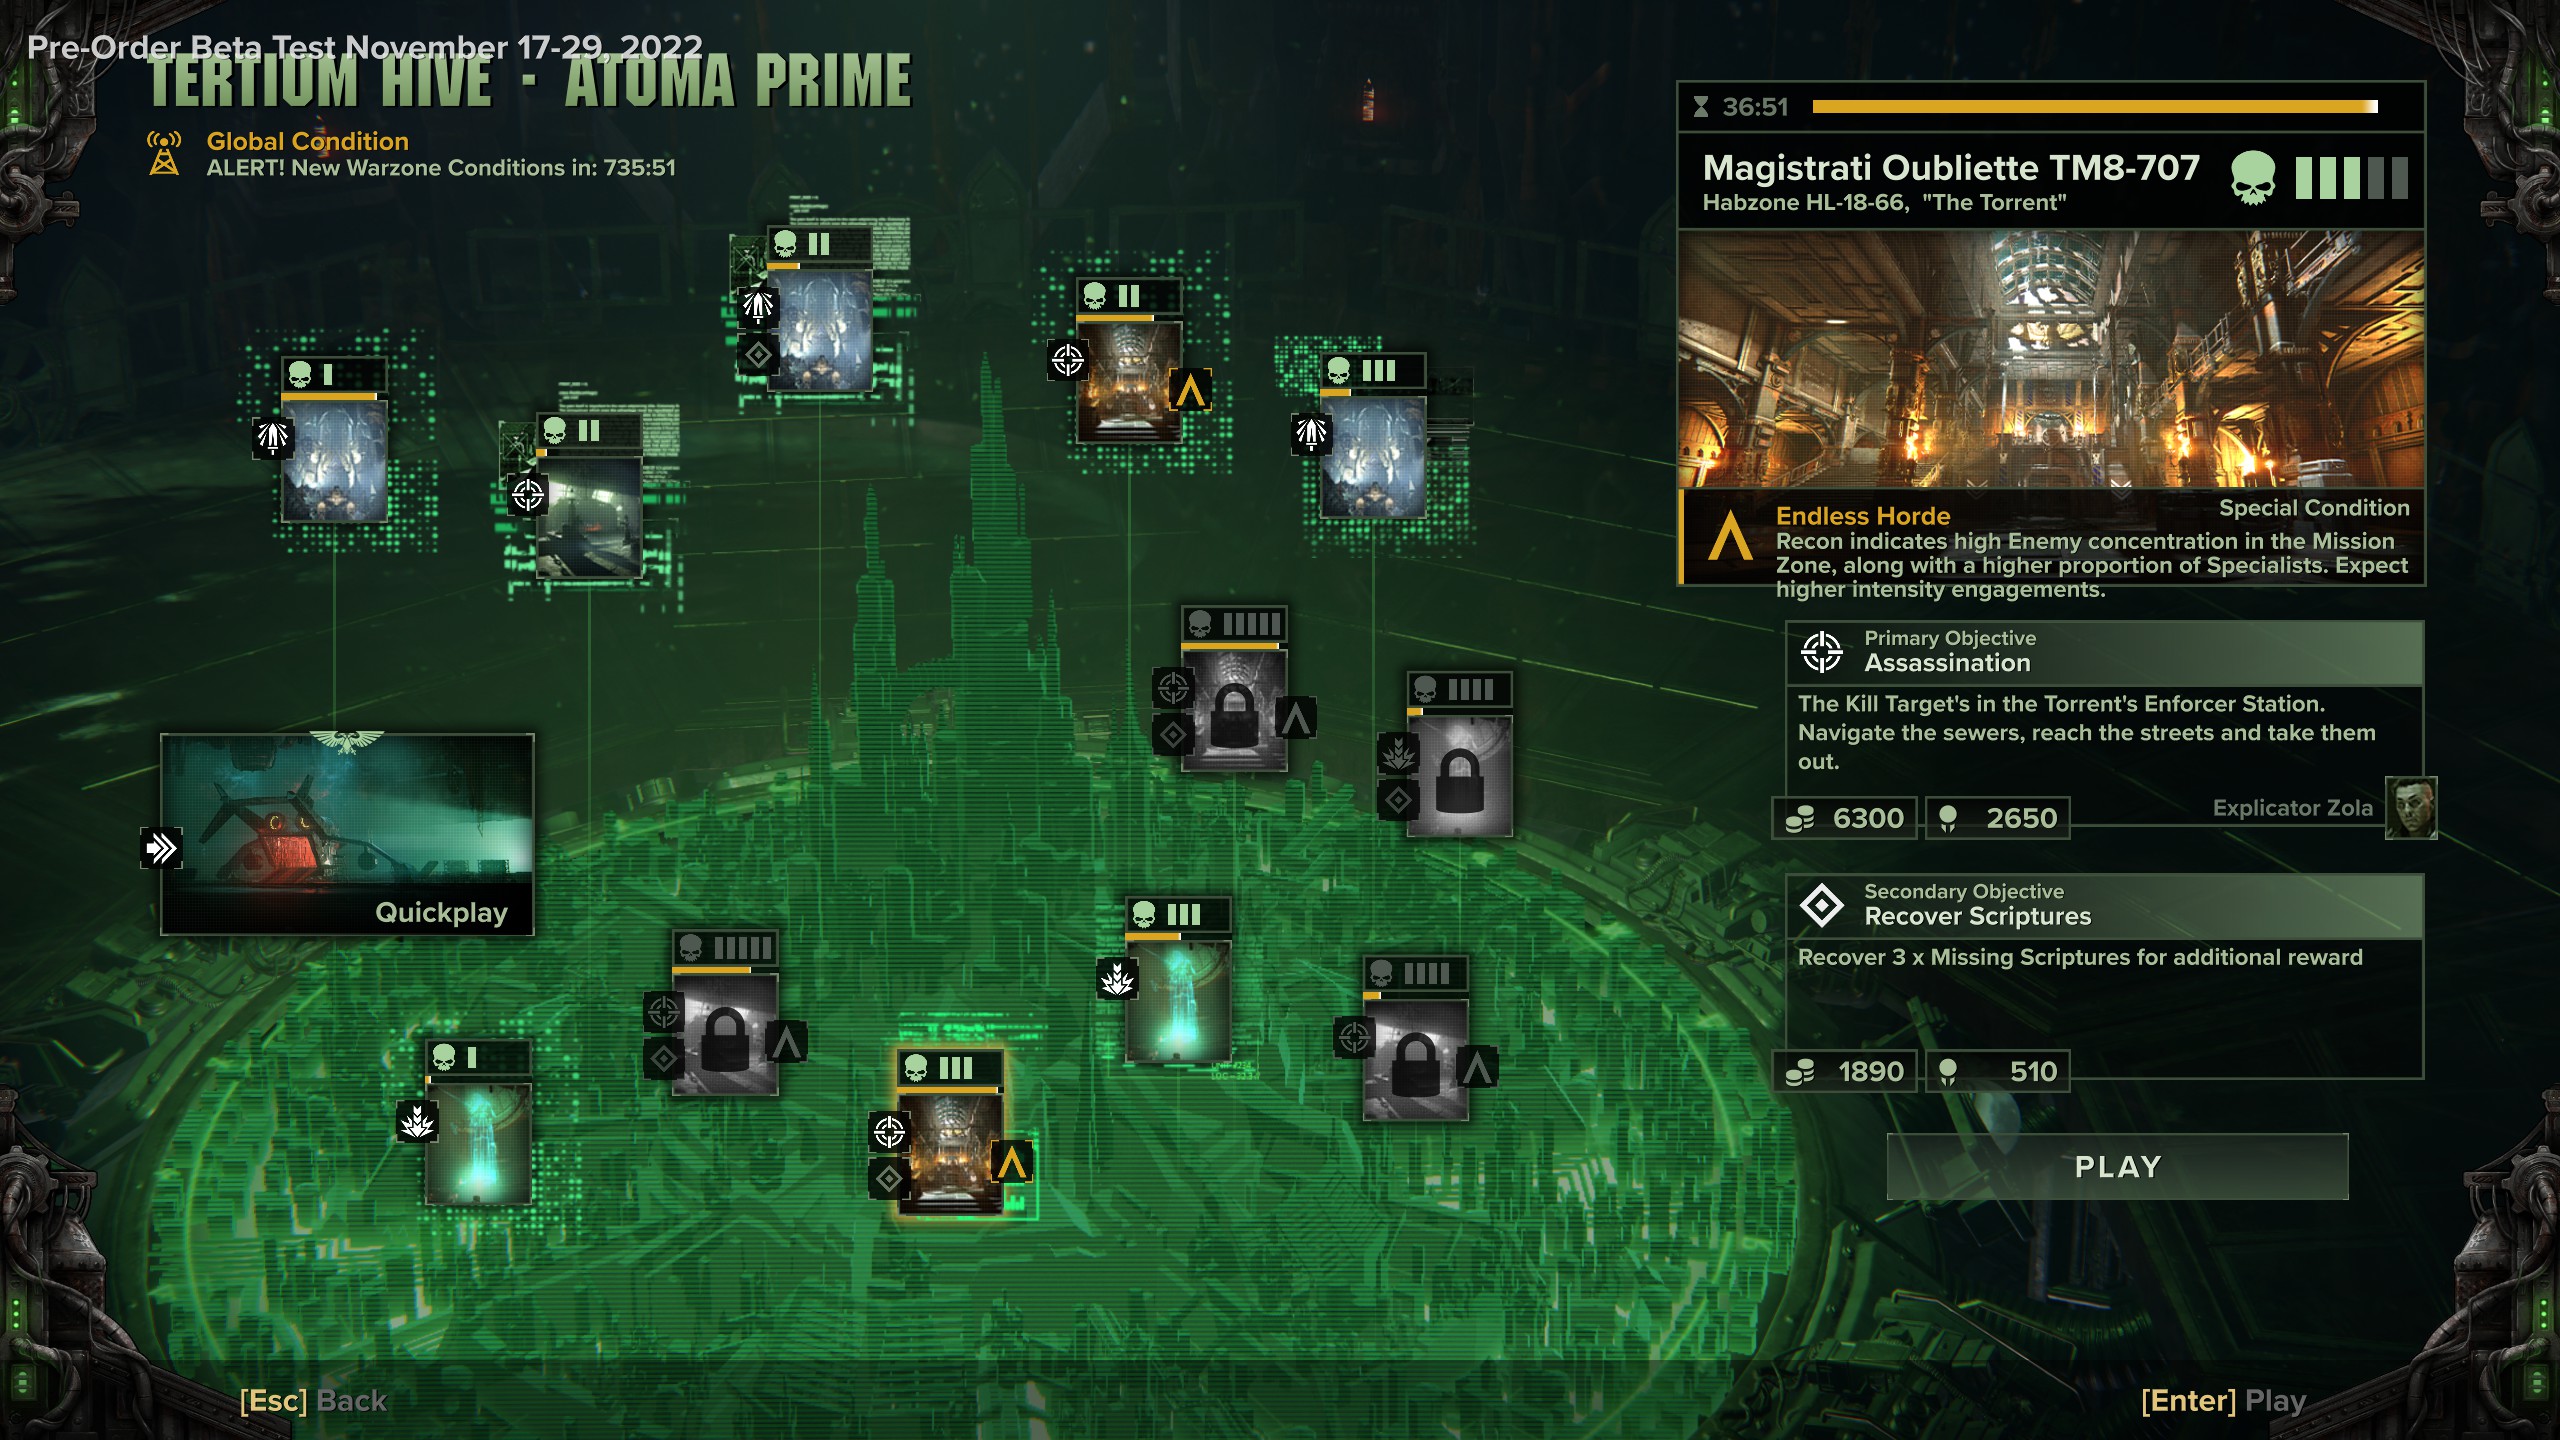 How Warhammer 40K: Darktide handles grimoires and scriptures